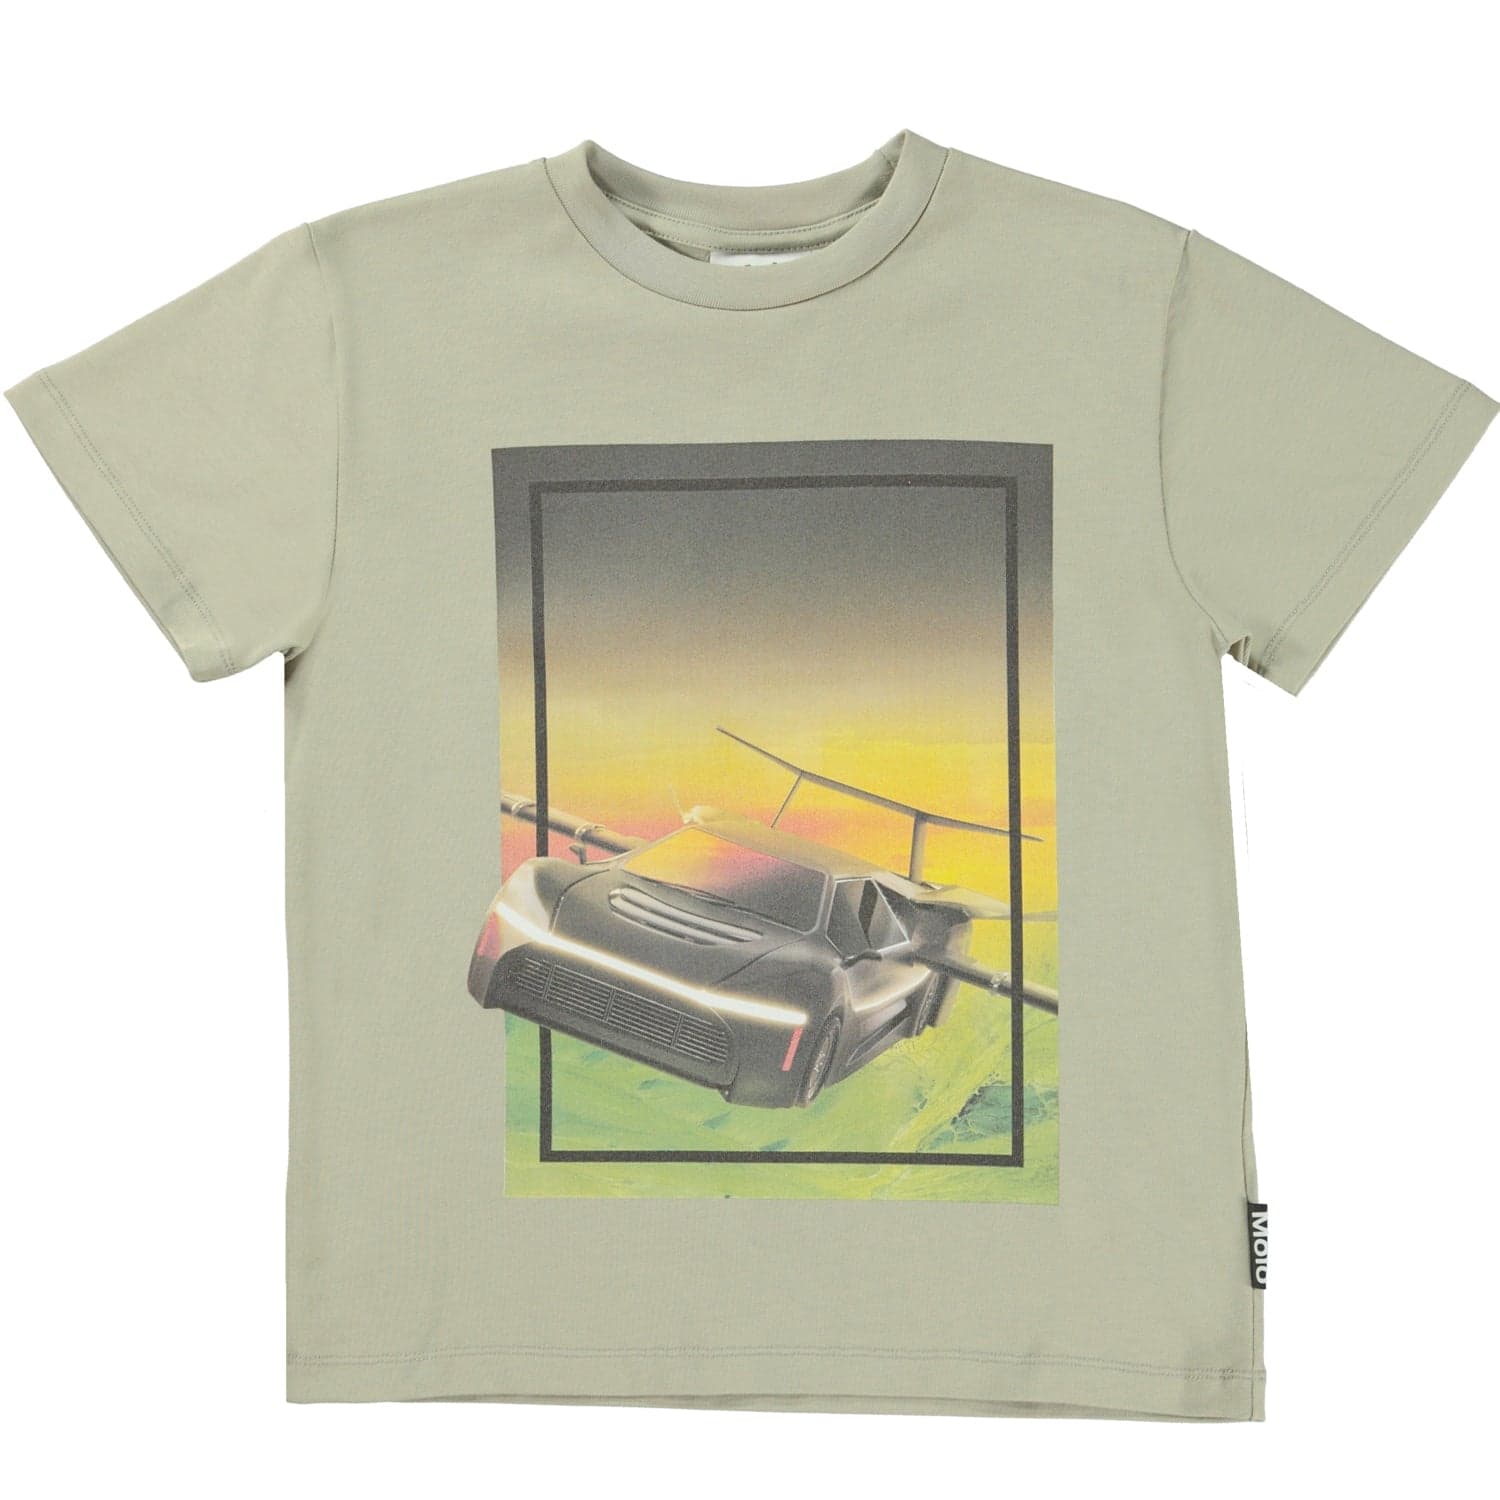 Roxo T-shirt (Flying Car)